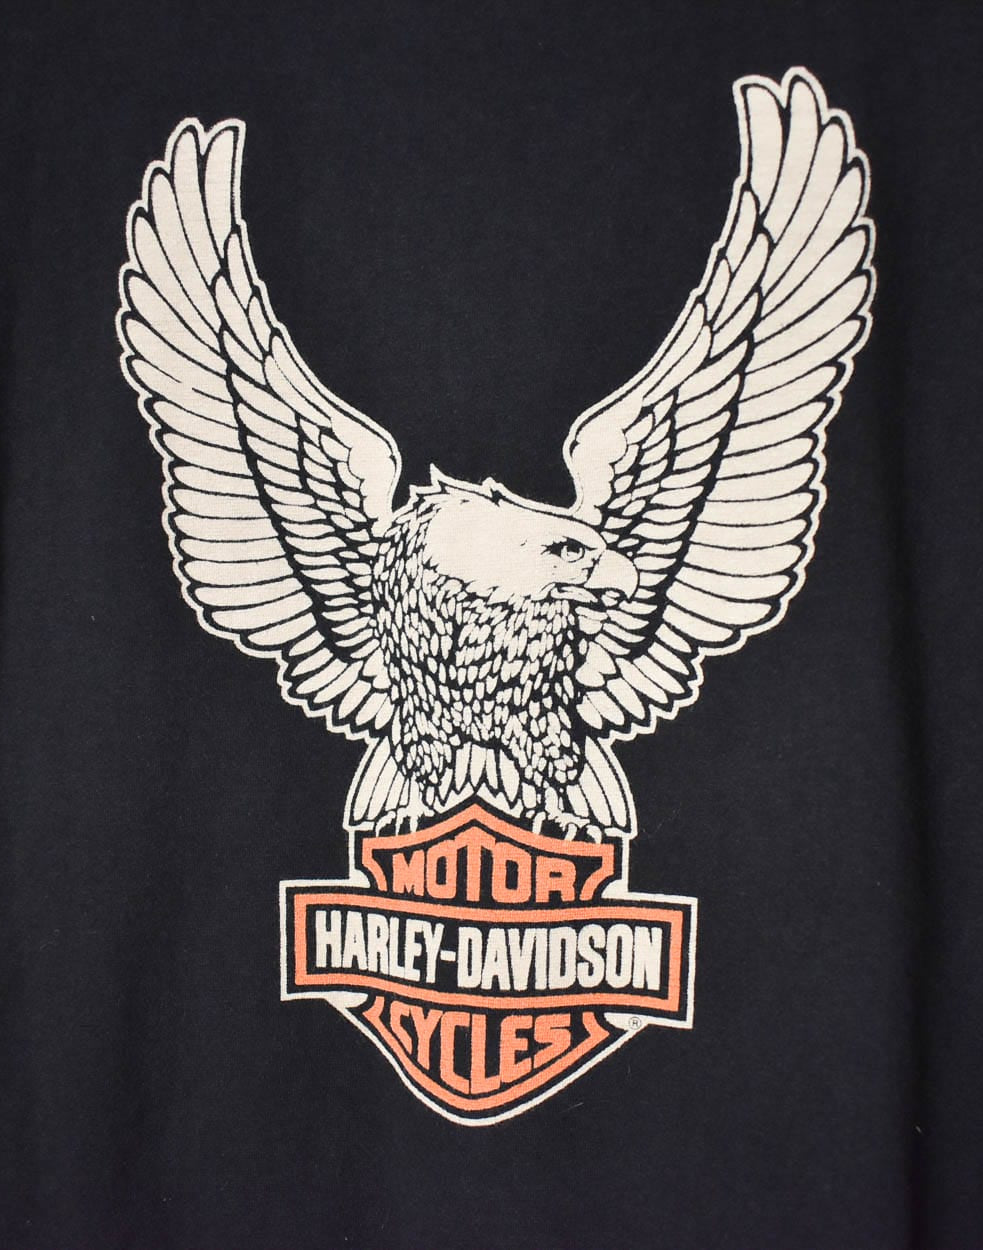 Black Harley Davidson Eagle Graphic T-Shirt - Small Women's